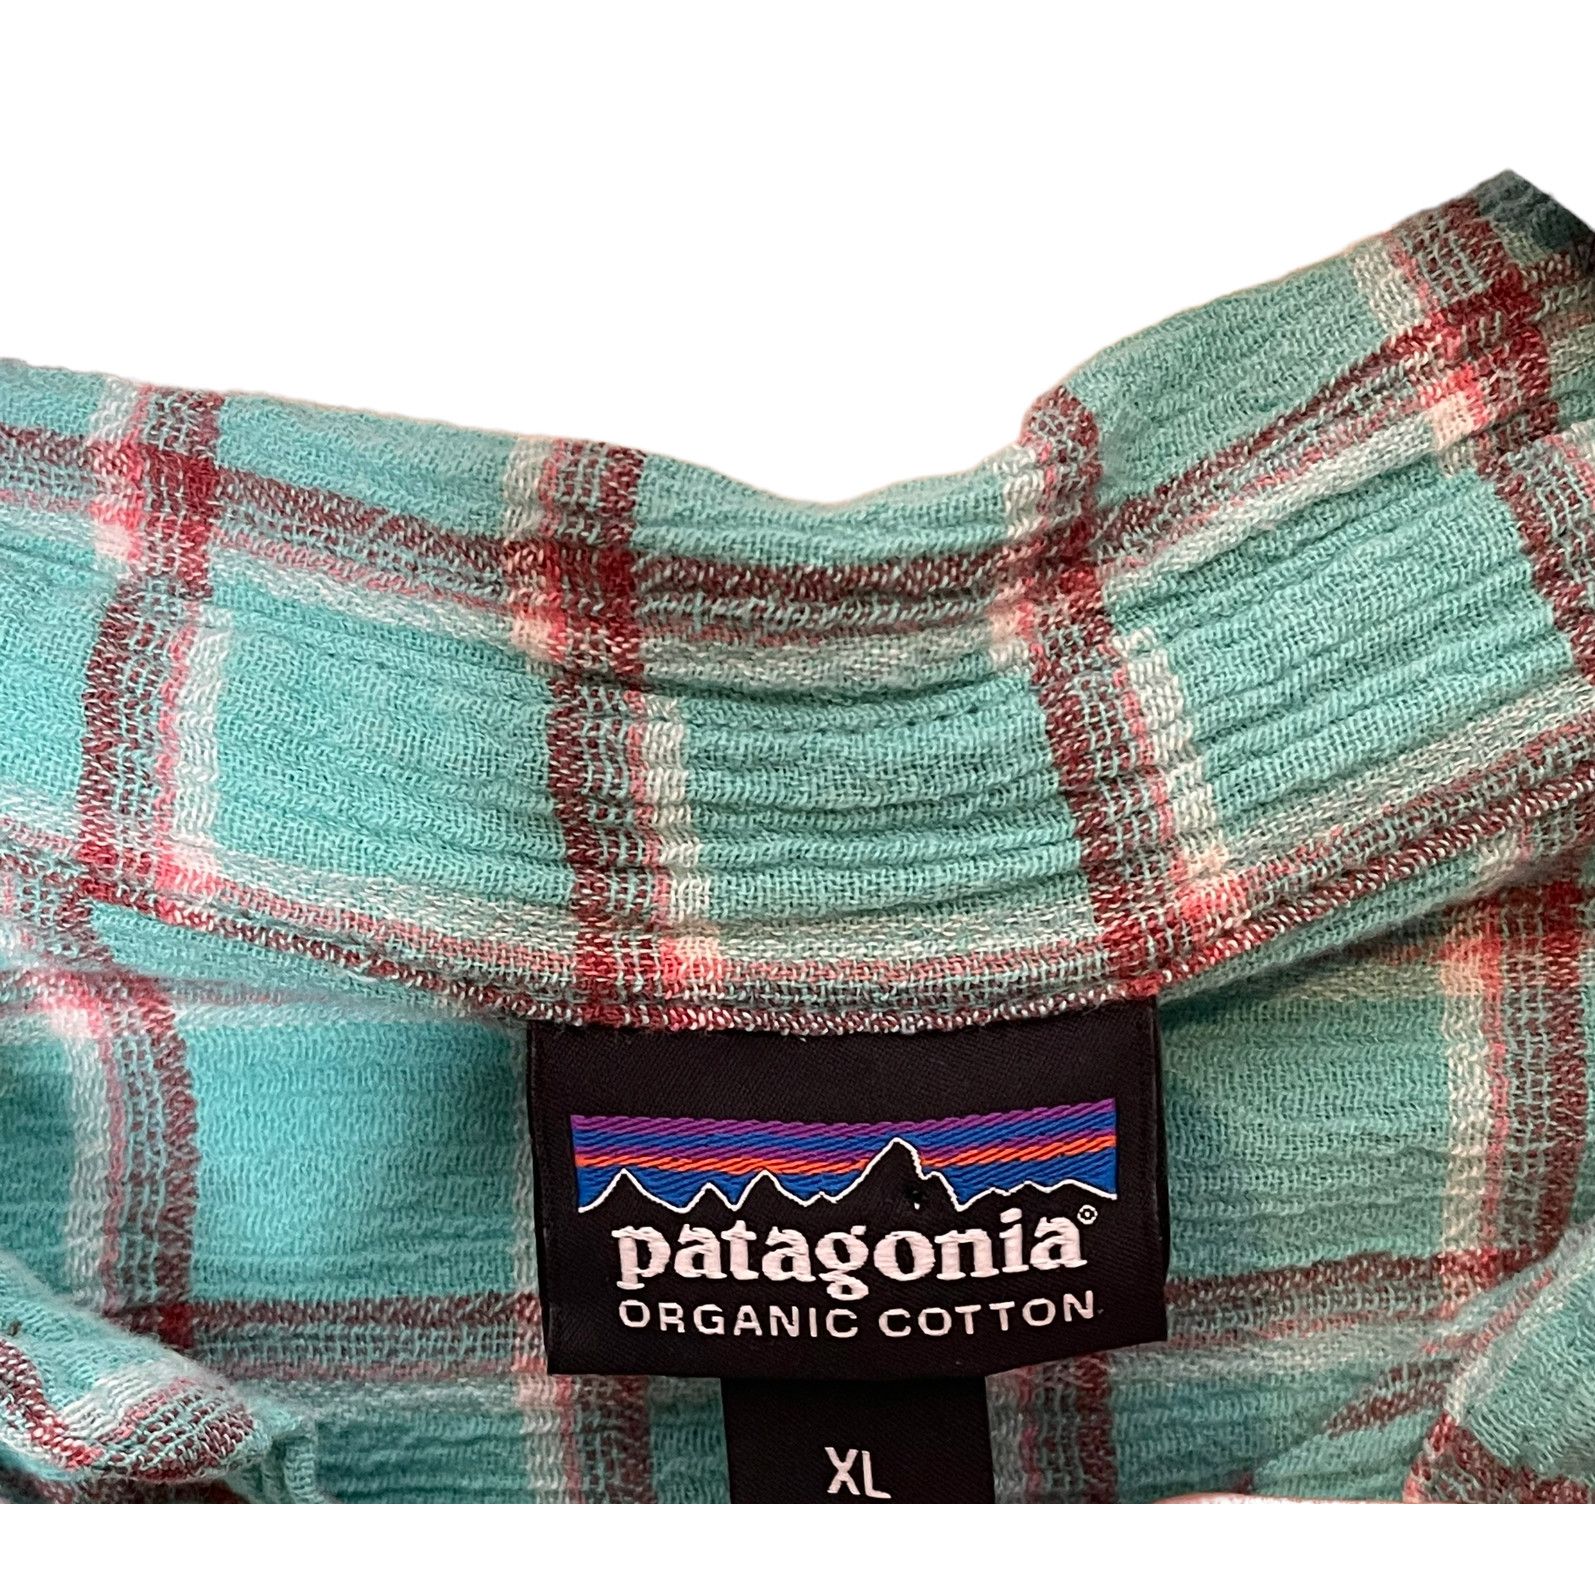 Patagonia Patagonia Shirt Size XL Teal Red White Check Organic Cotton Size US XL / EU 56 / 4 - 3 Thumbnail